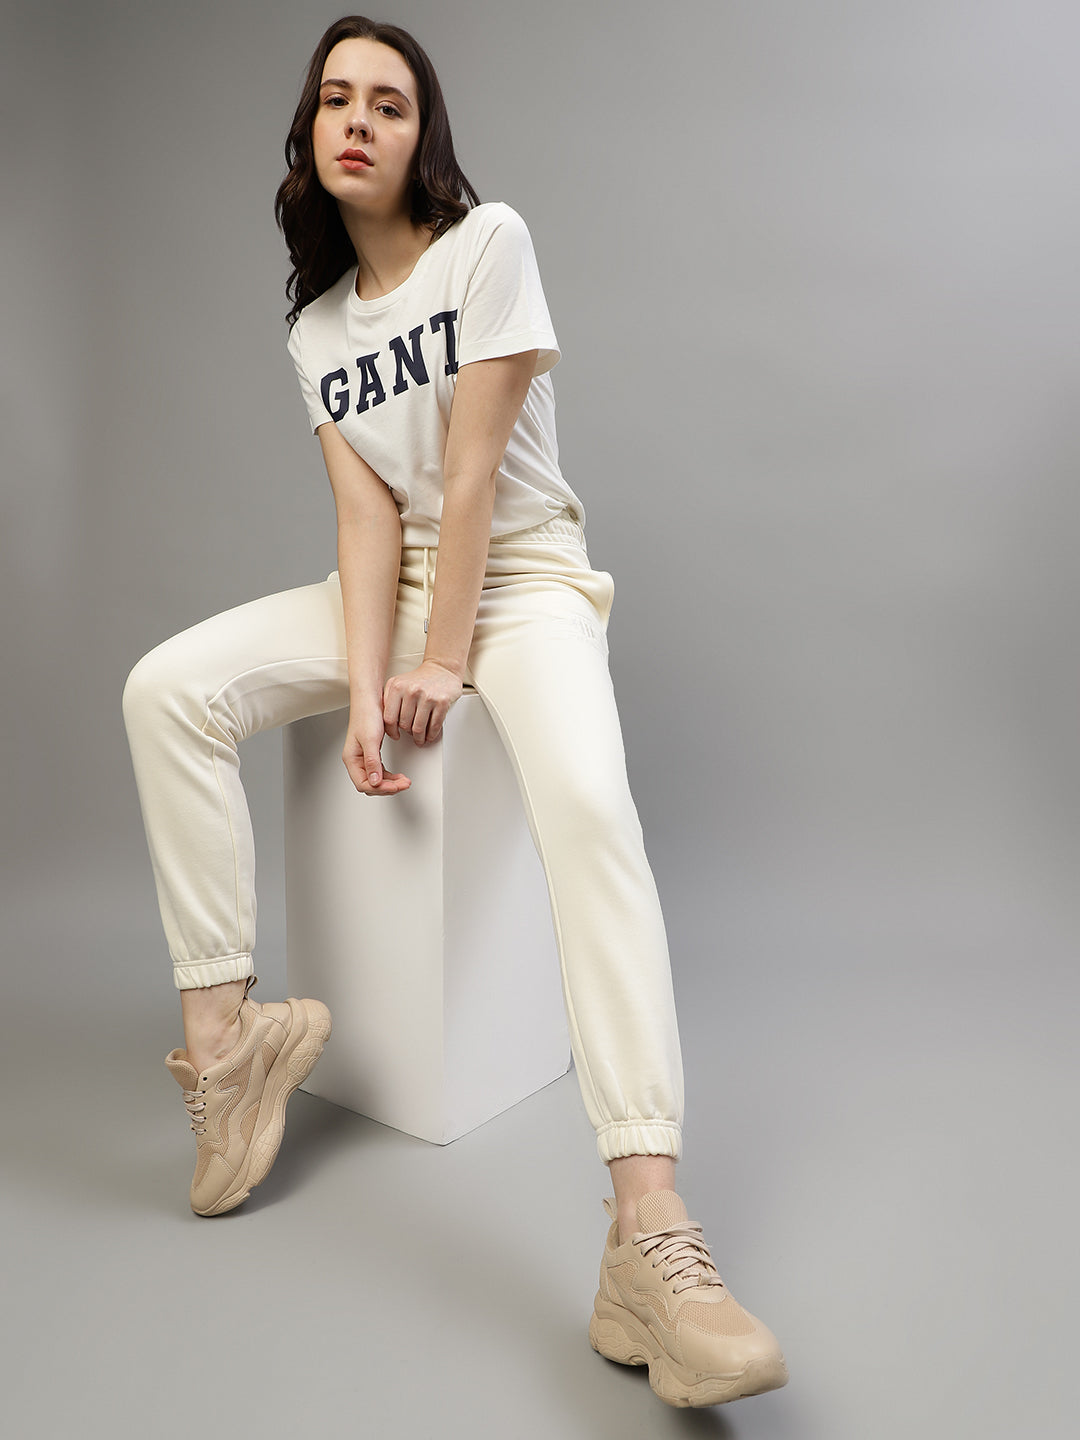 Gant White Fashion Printed Regular Fit T-Shirt